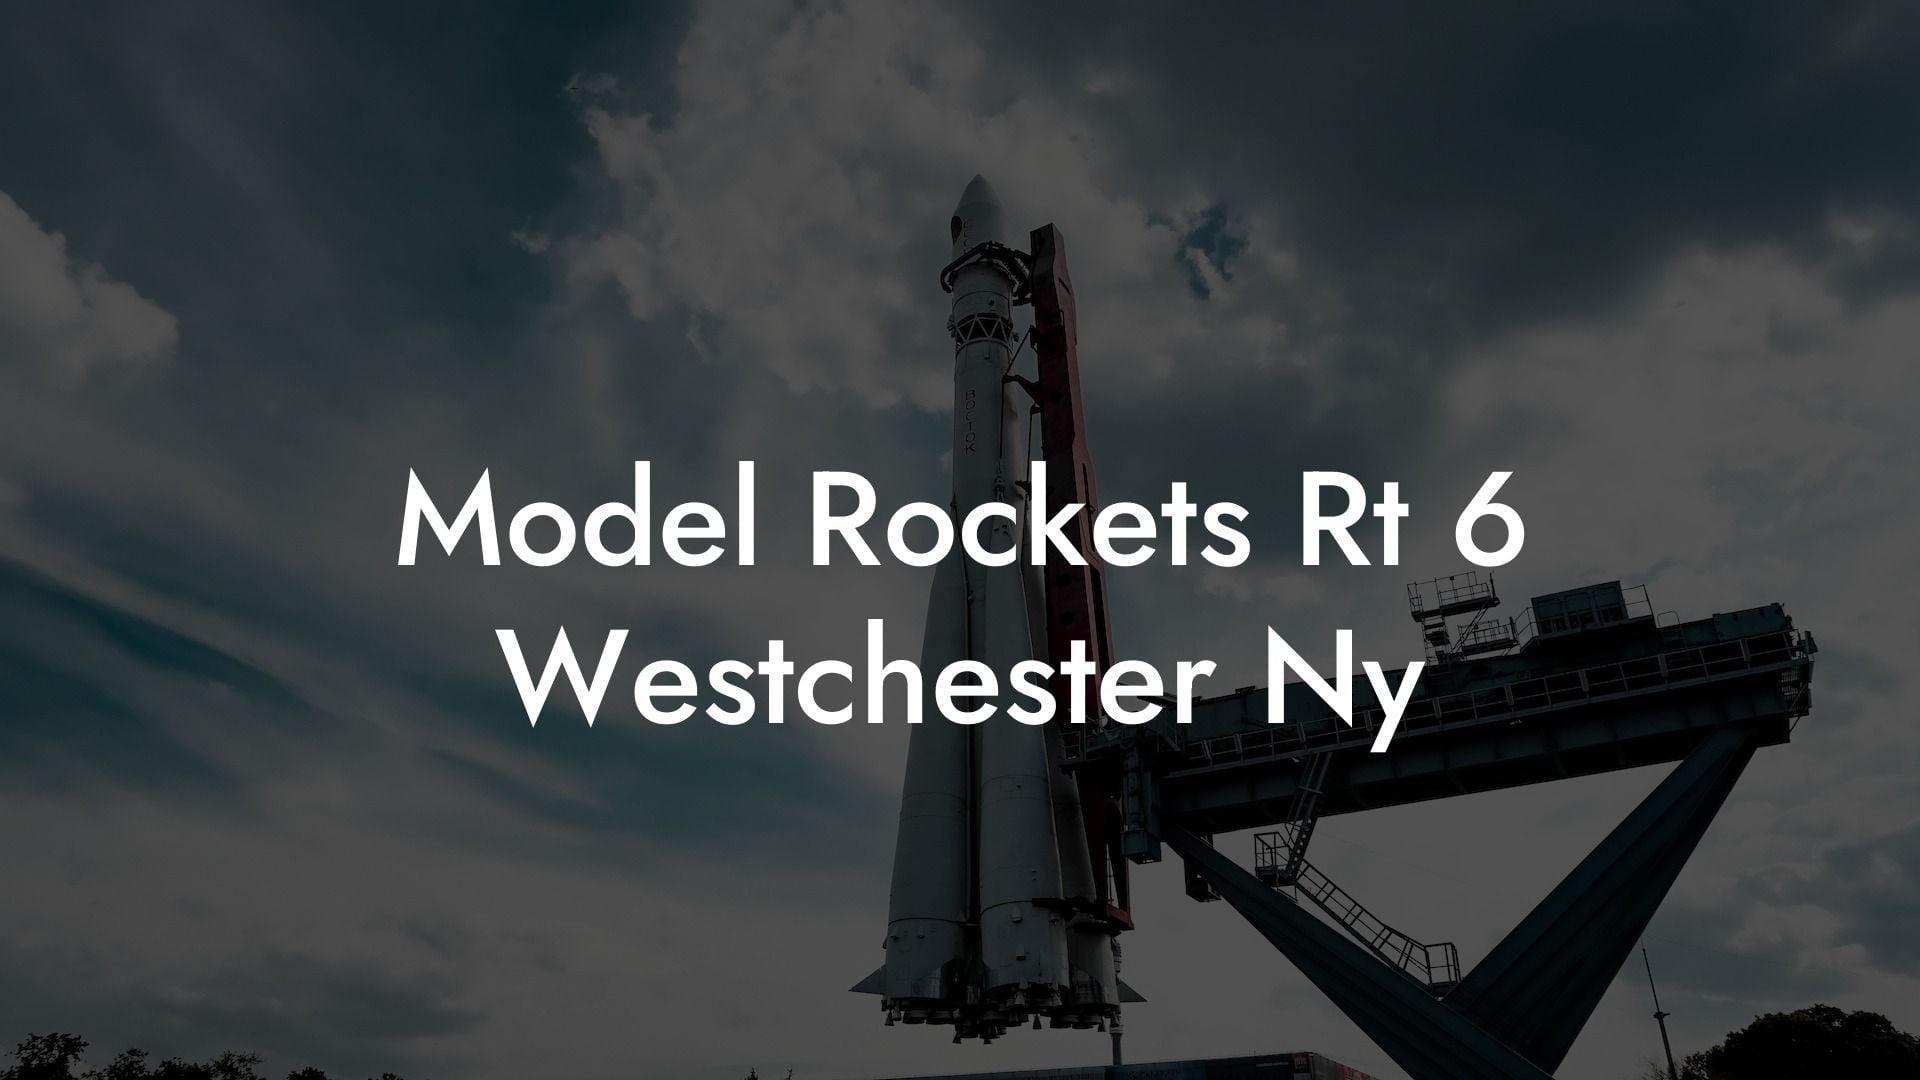 Model Rockets Rt 6 Westchester Ny